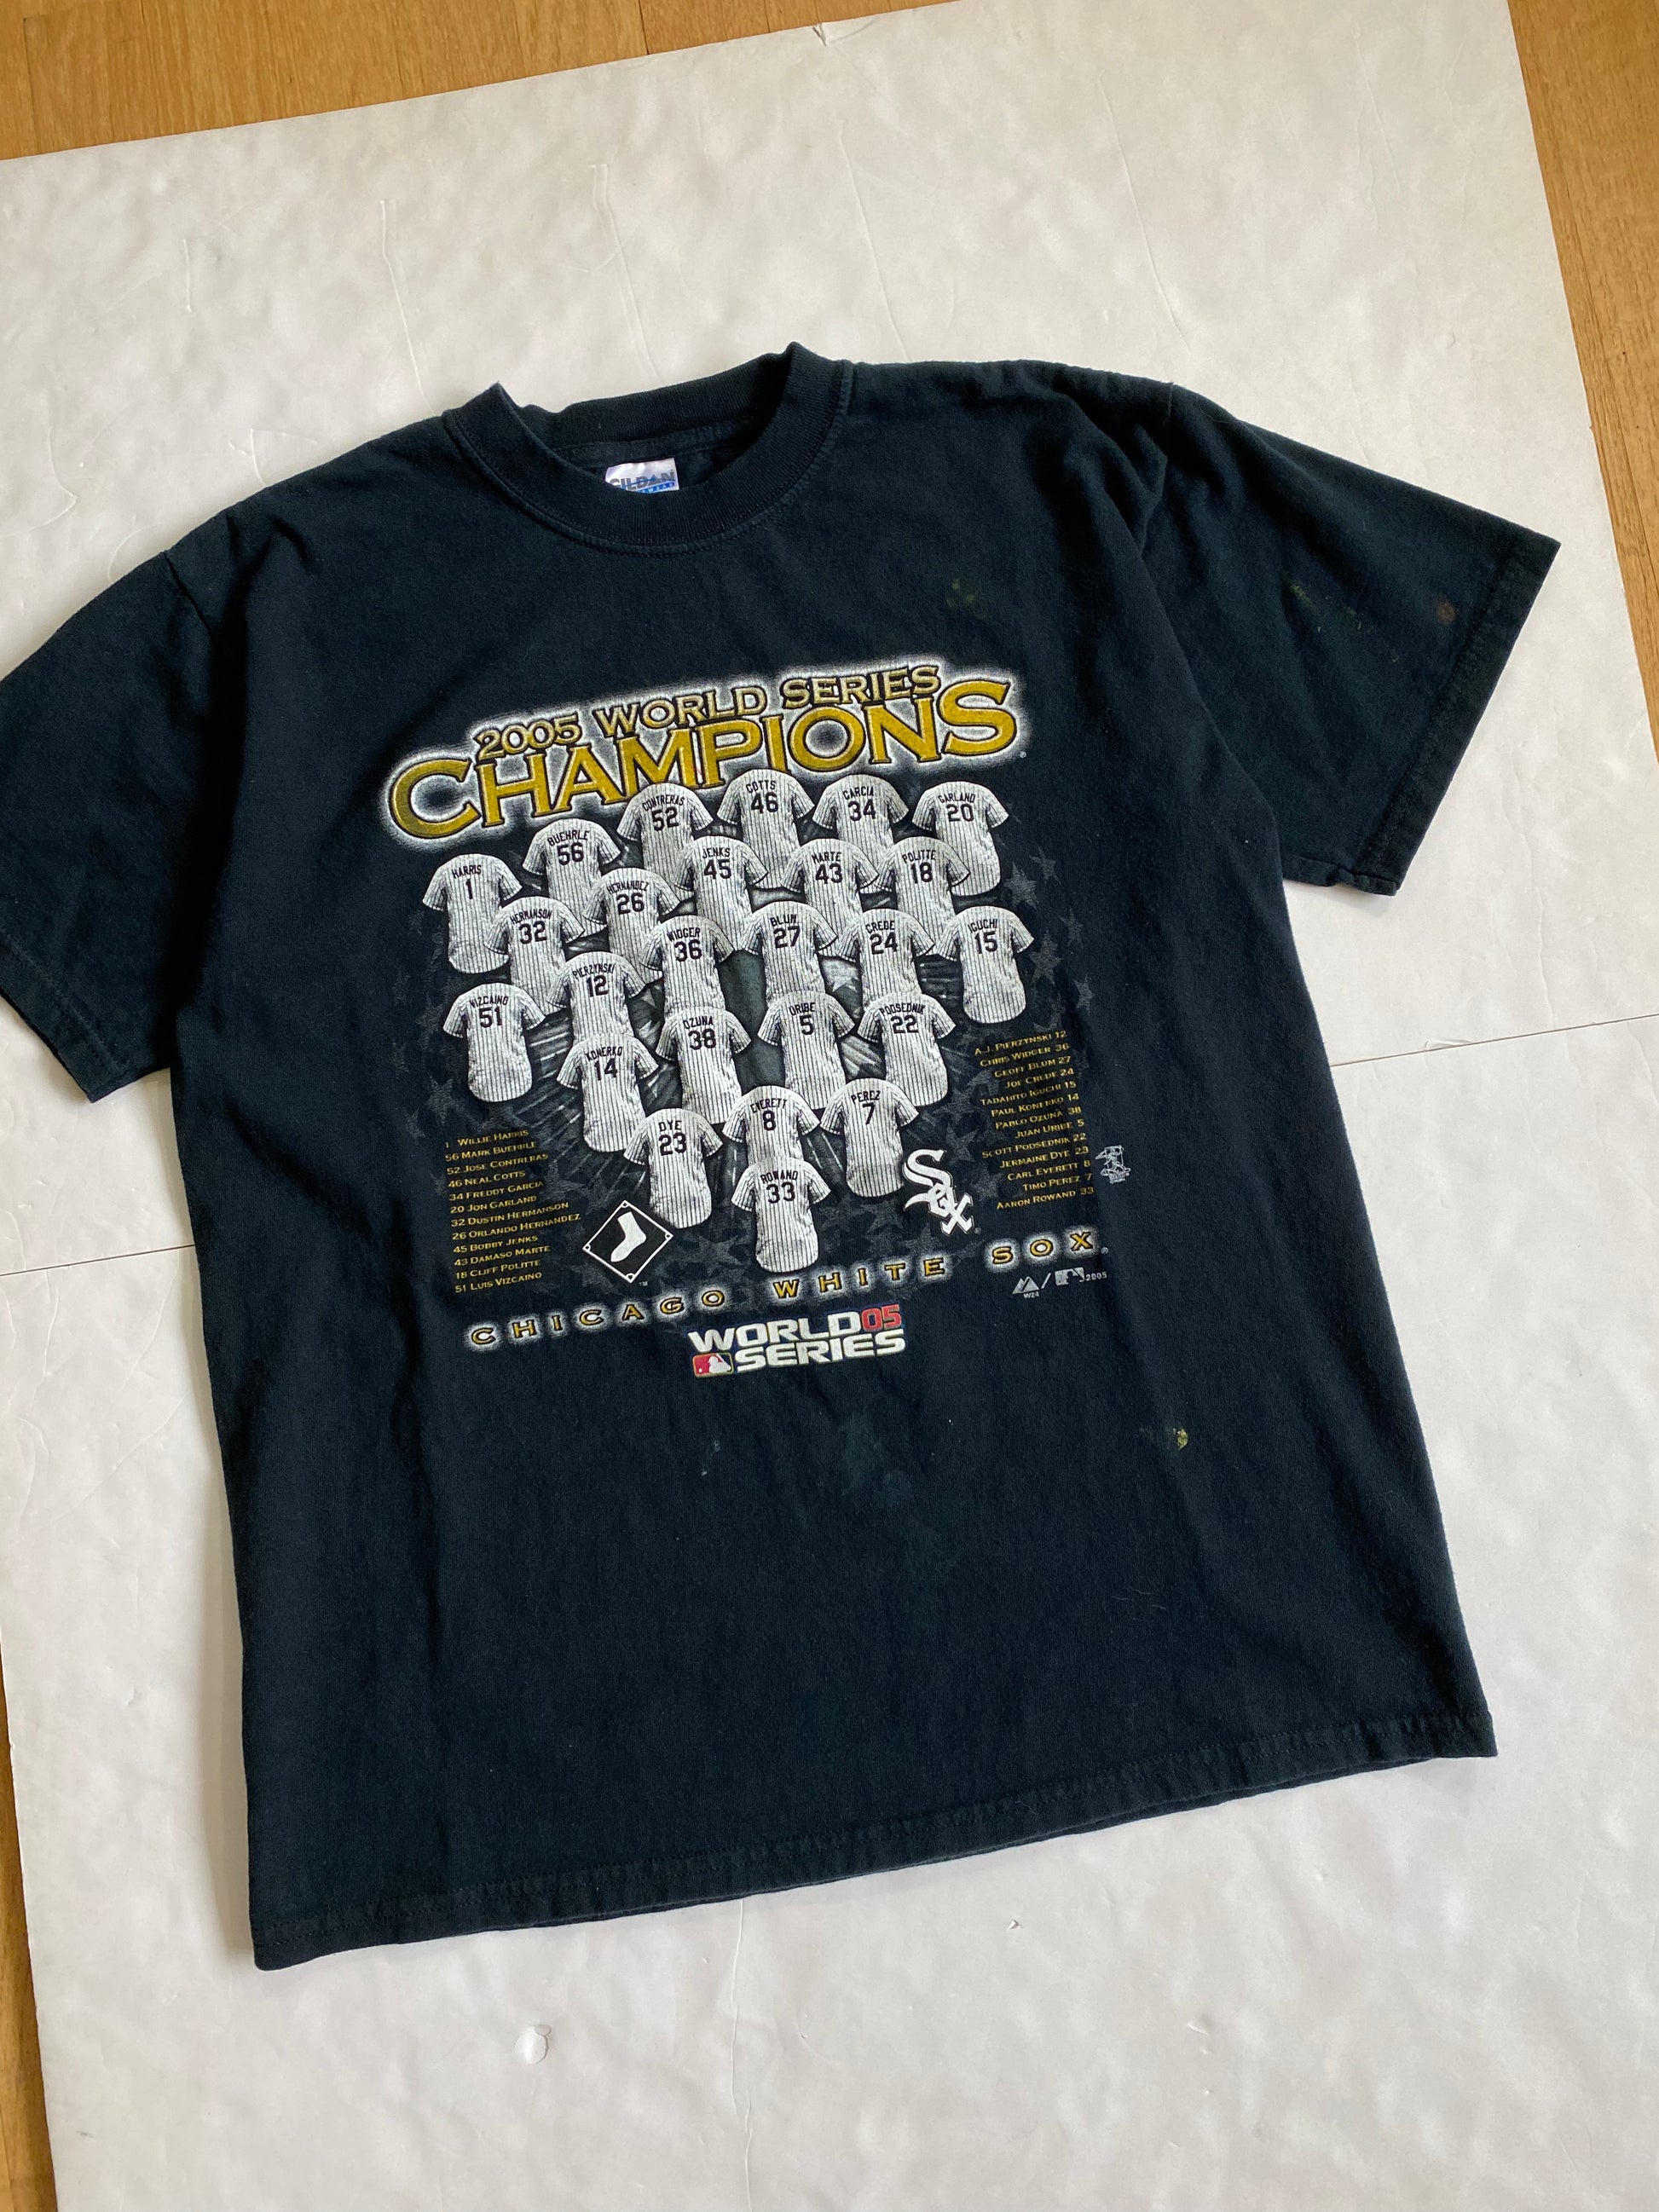 Homage Black Chicago White Sox 2005 World Series Champions Tri-Blend T-Shirt